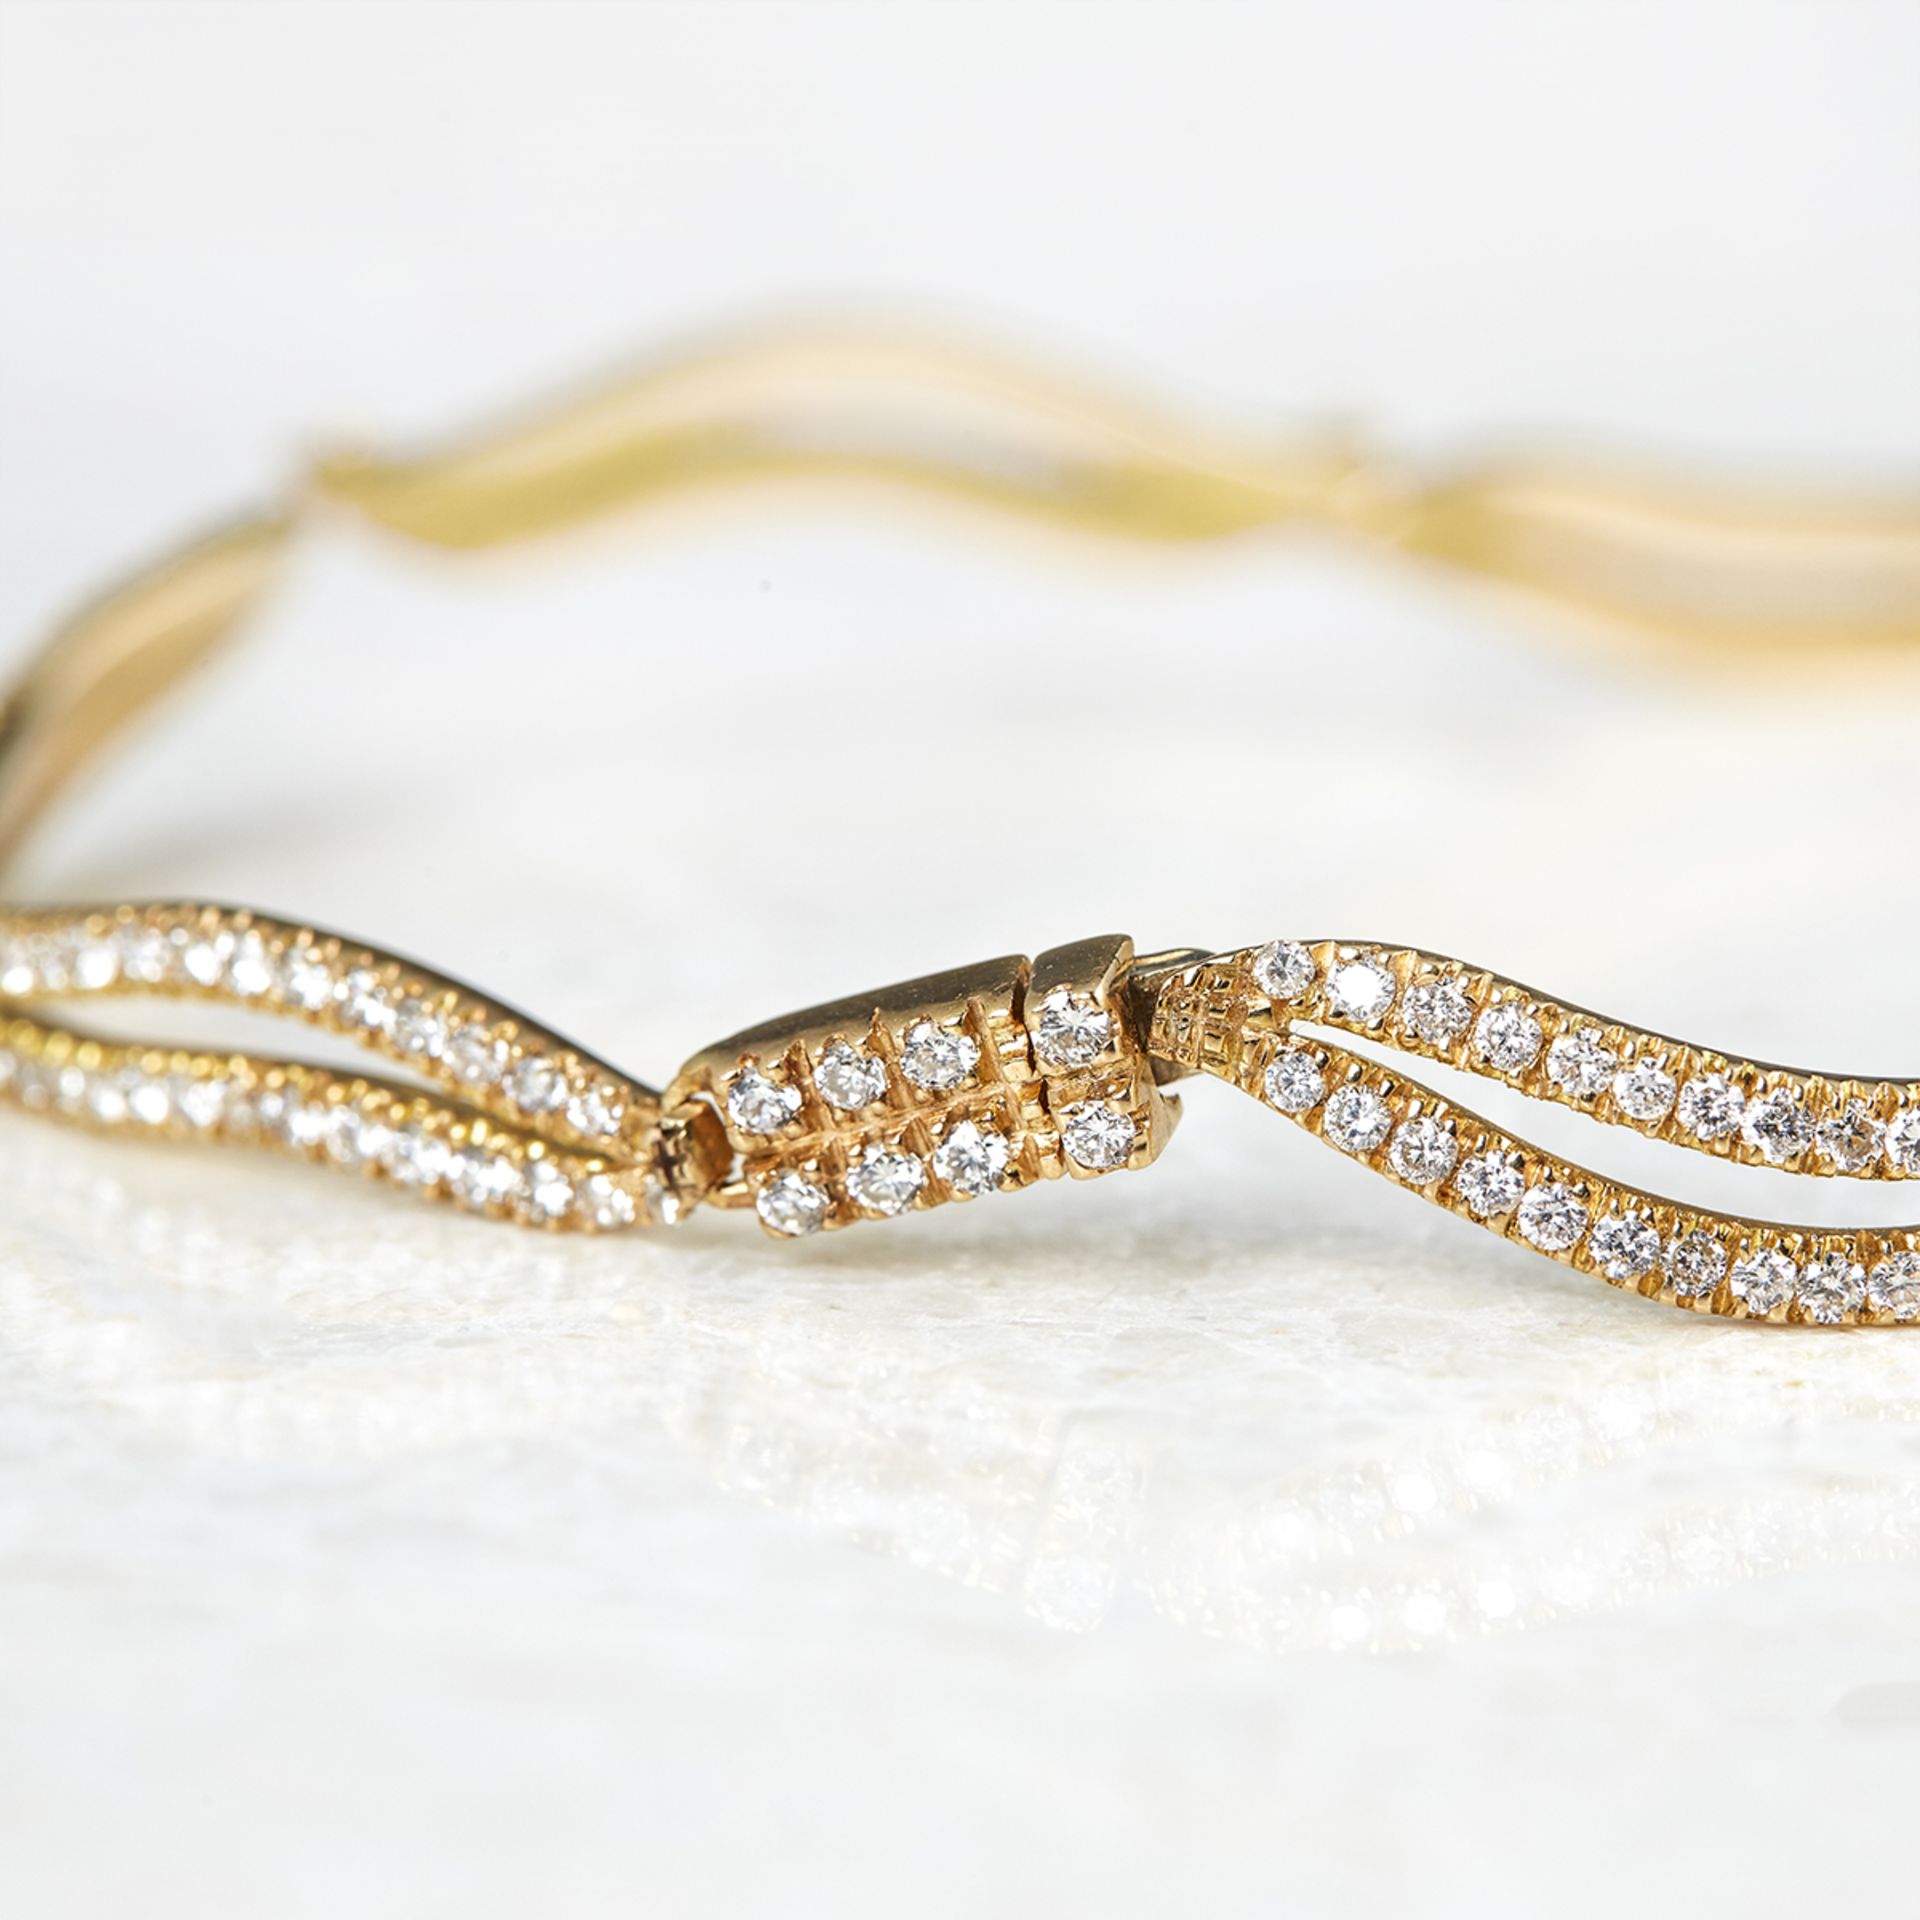 Unbranded, 18k Yellow Gold 2.56ct Diamond Wavy Link Bracelet - Image 4 of 6